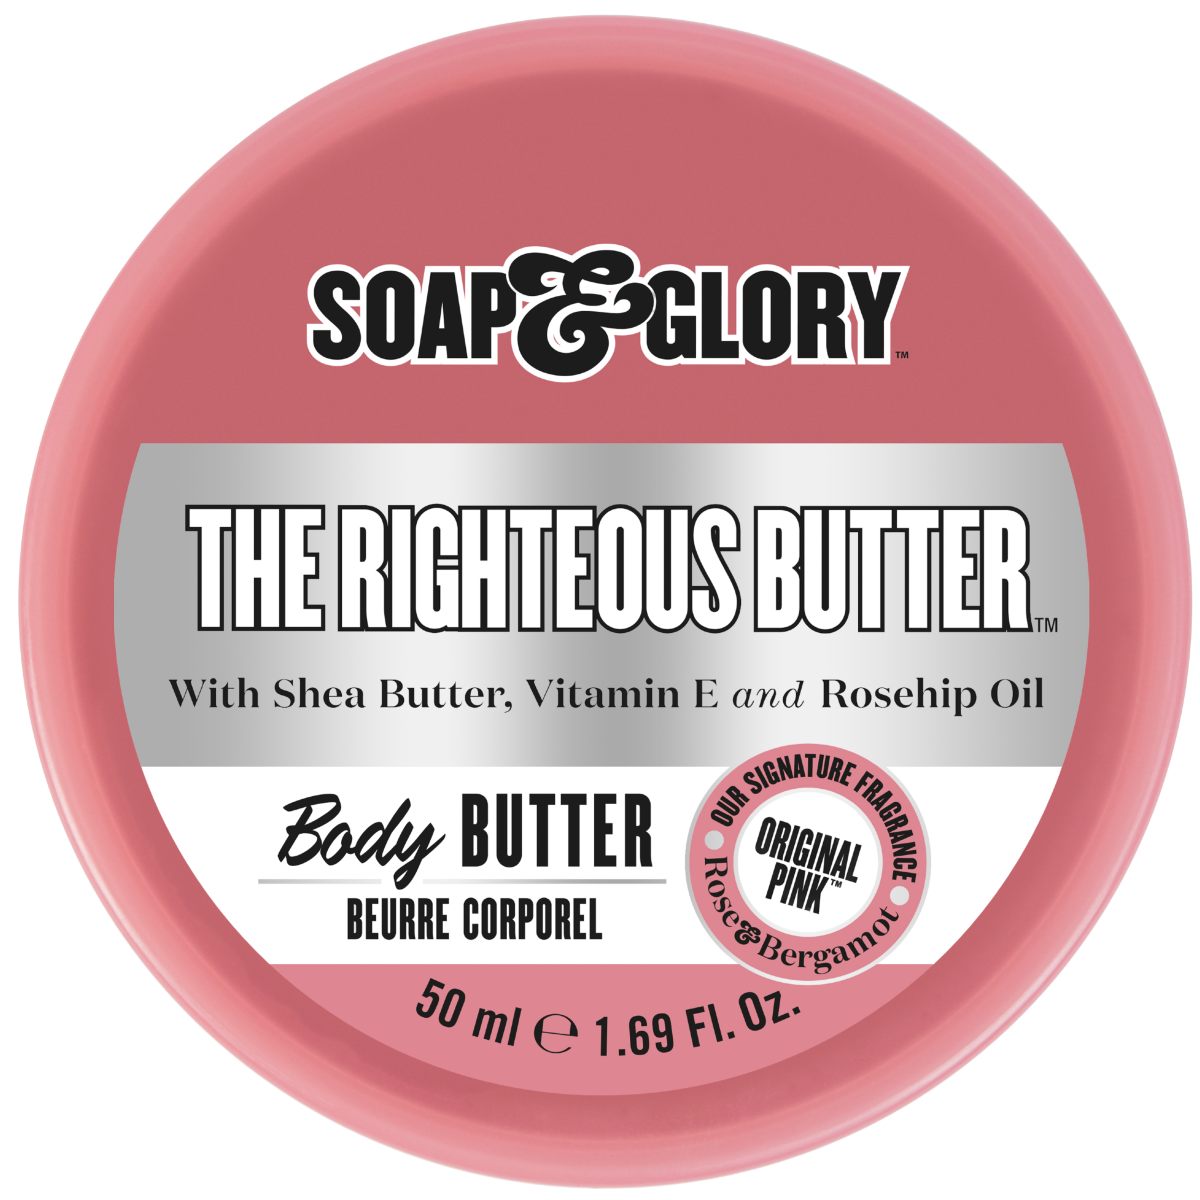 Original Pink The Righteous Butter Moisturising Body Butter Mini Travel Size